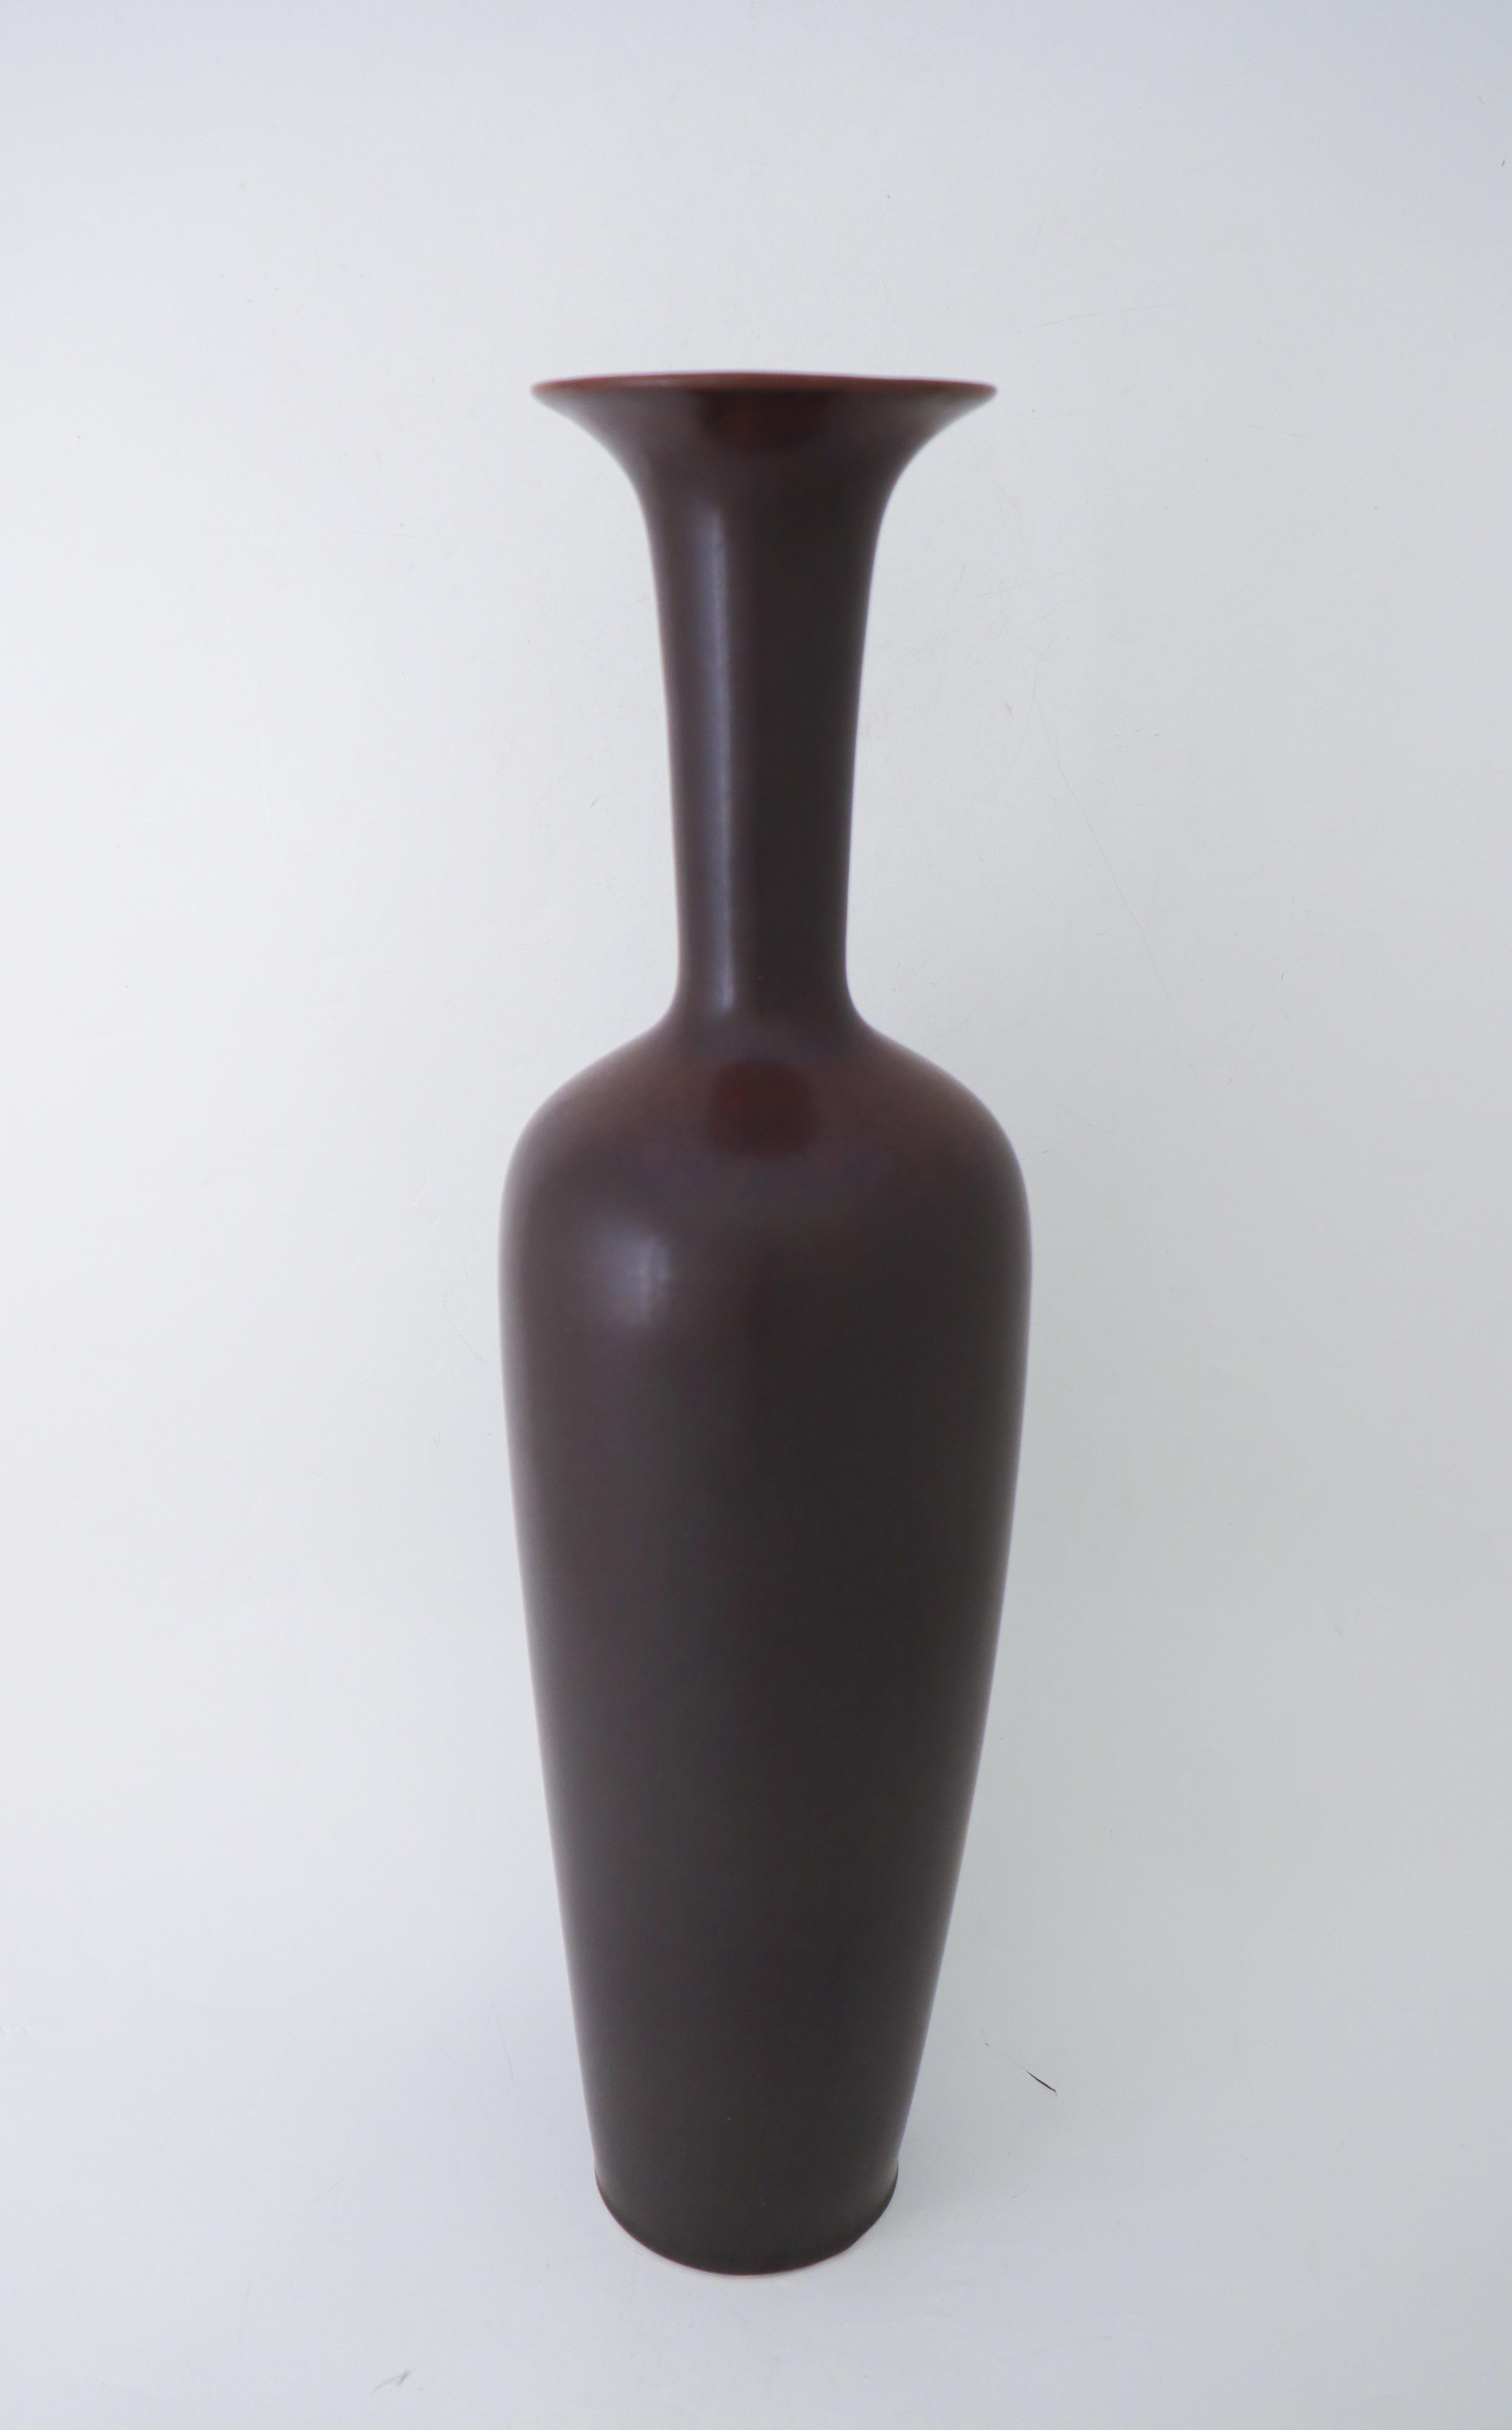 Scandinavian Modern Large Ceramic Floor Vase - Dark Brown - Gunnar Nylund - Rörstrand - 20th Century For Sale